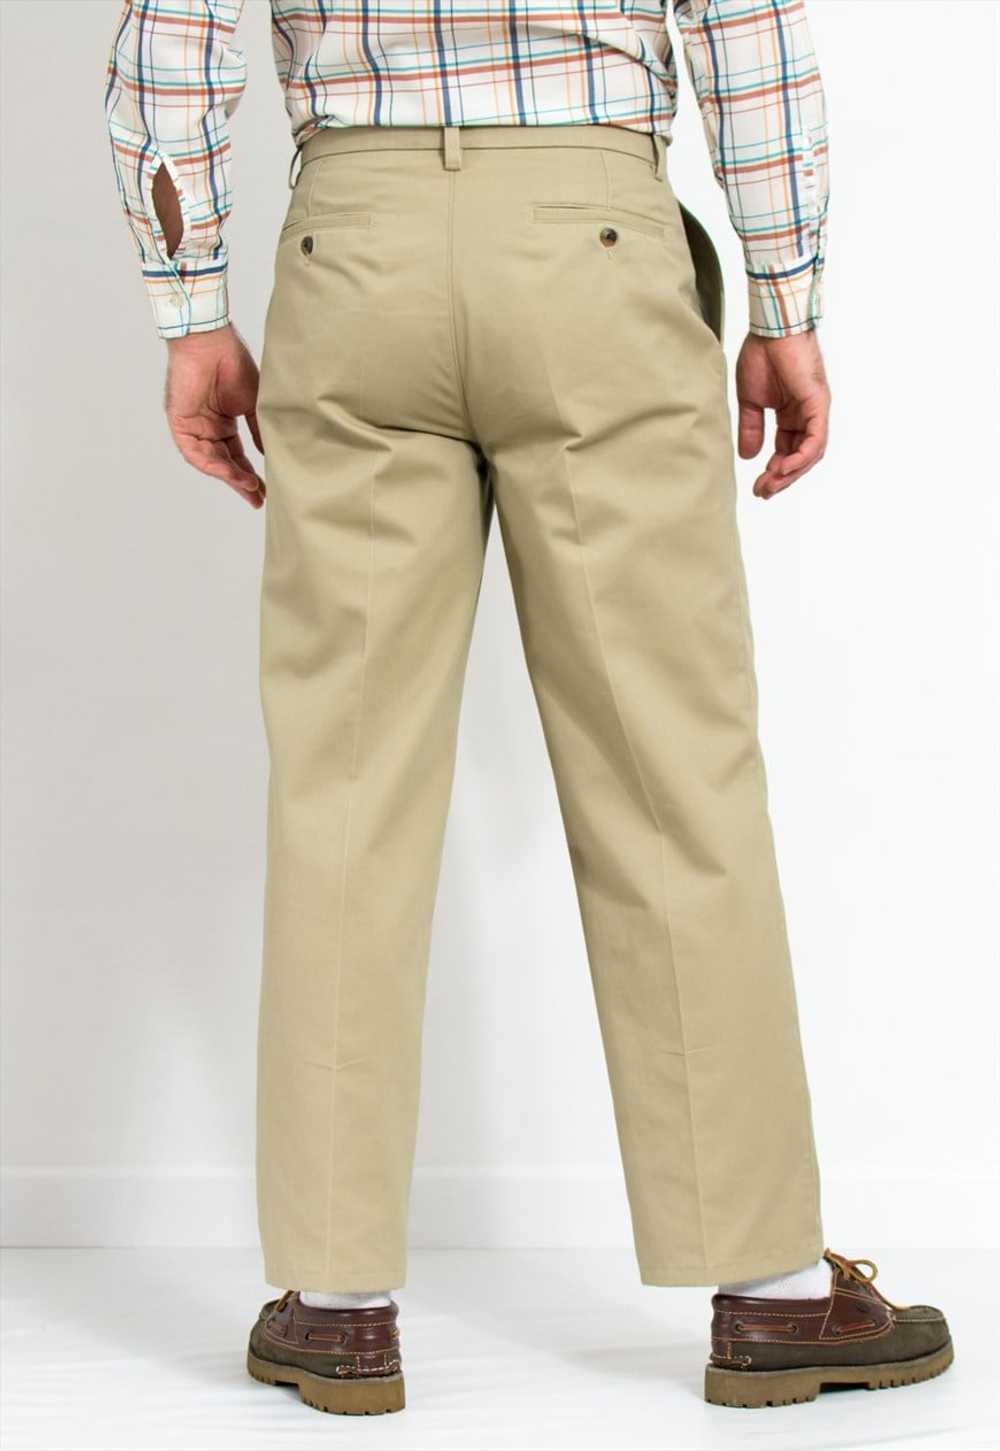 St. John's Bay Vintage pleated pants in beige siz… - image 5